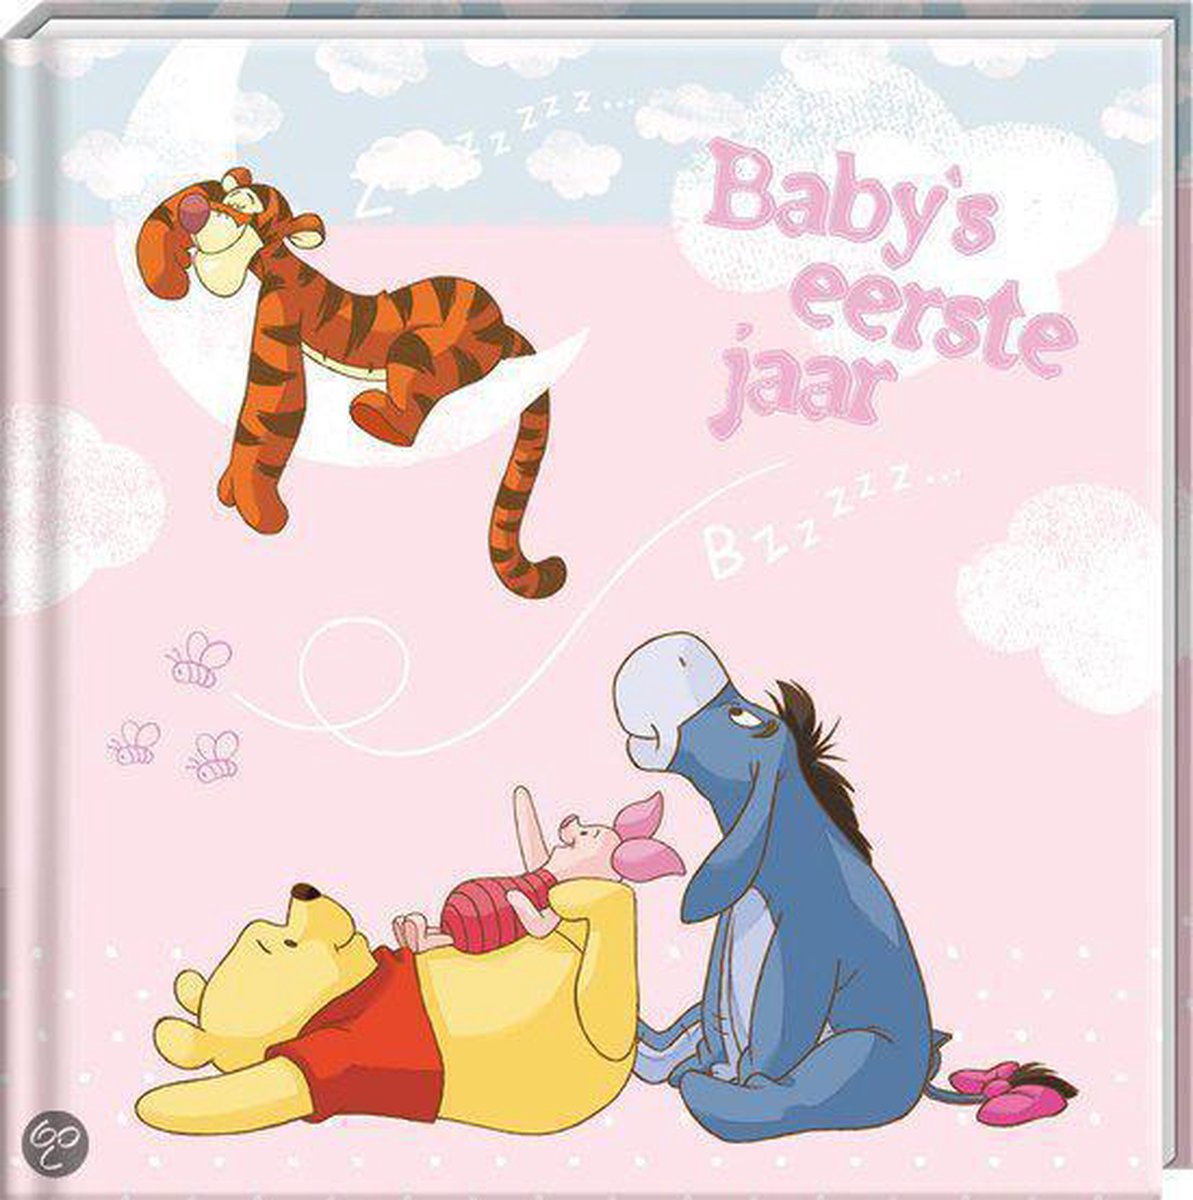 W. The Pooh Babyboek